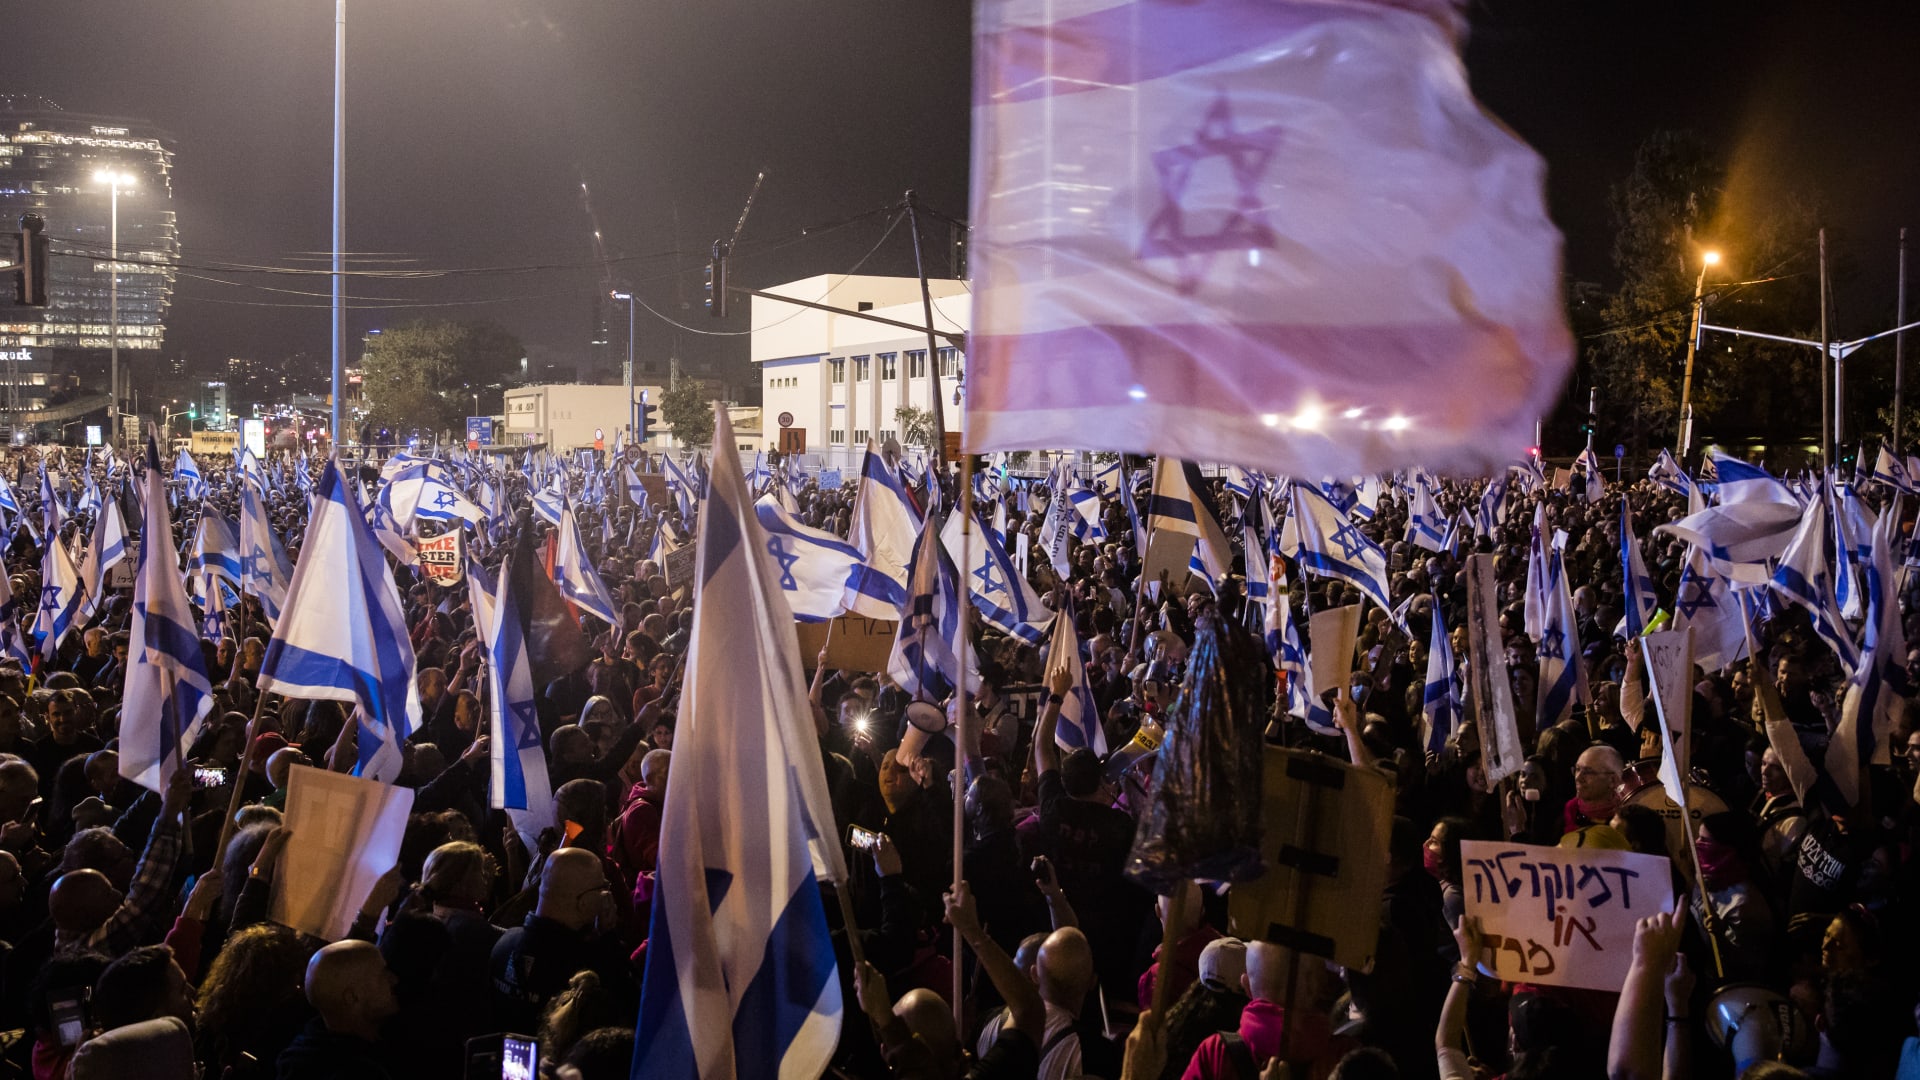 مظاهرات تل أبيب 